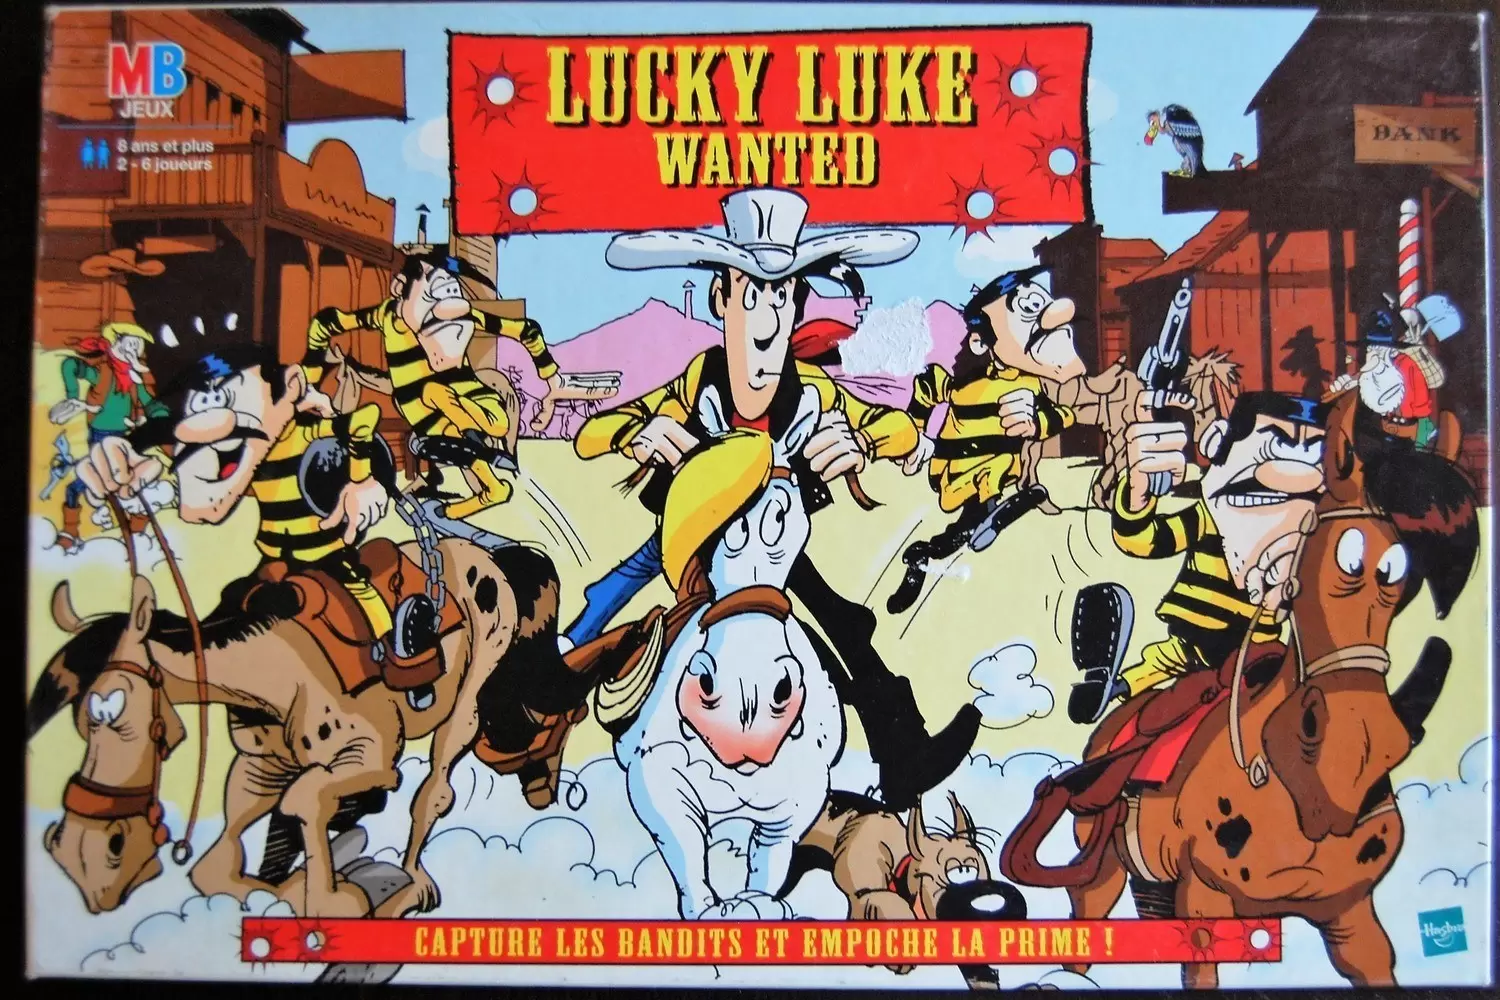 MB - Milton Bradley - Lucky Luke, Wanted